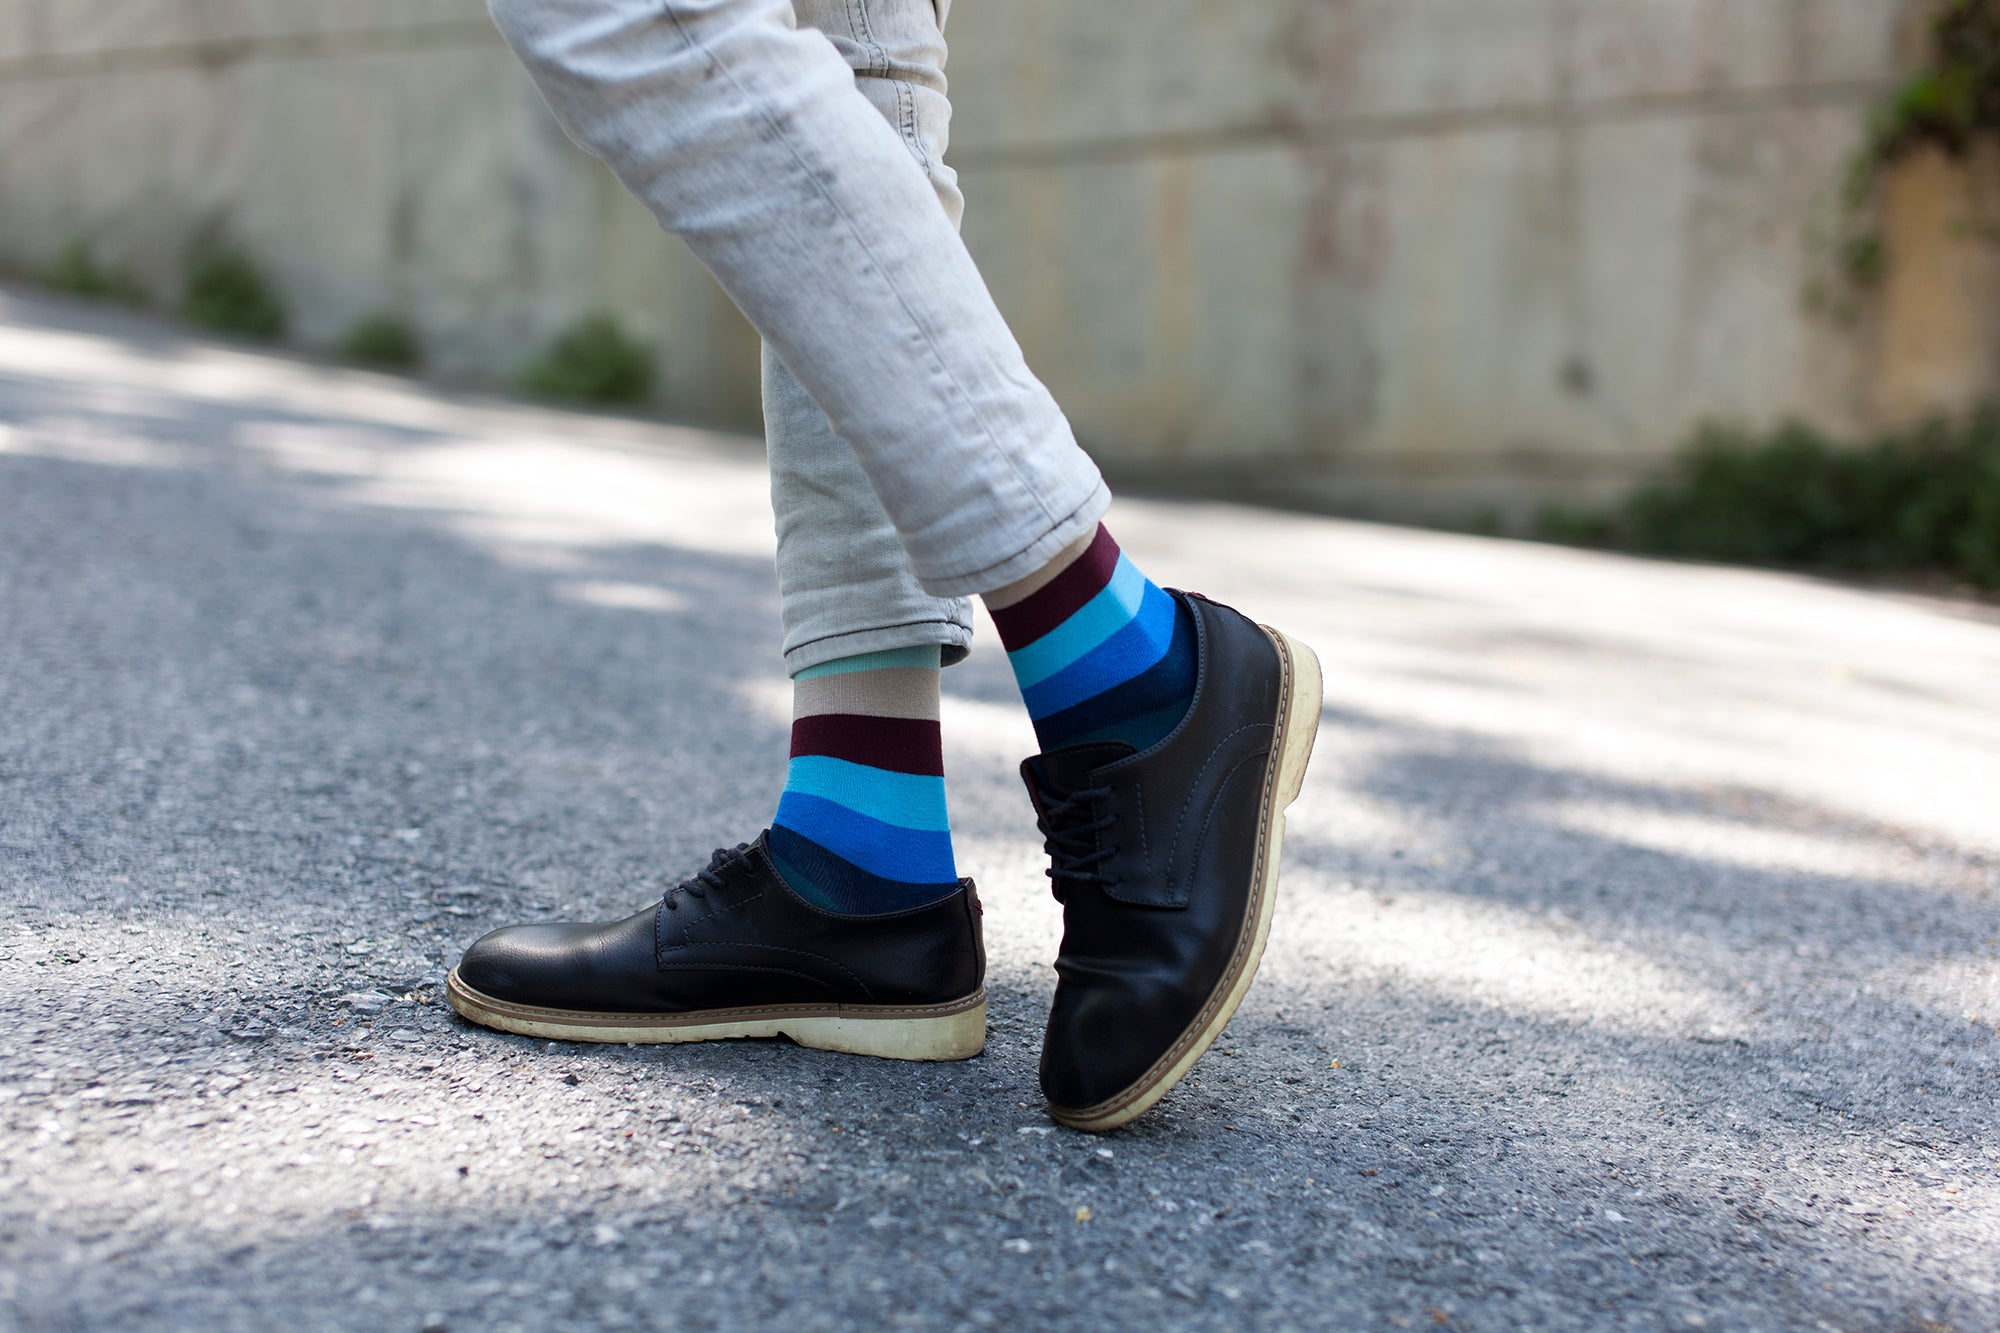 Men's Rainbow Stripes Socks